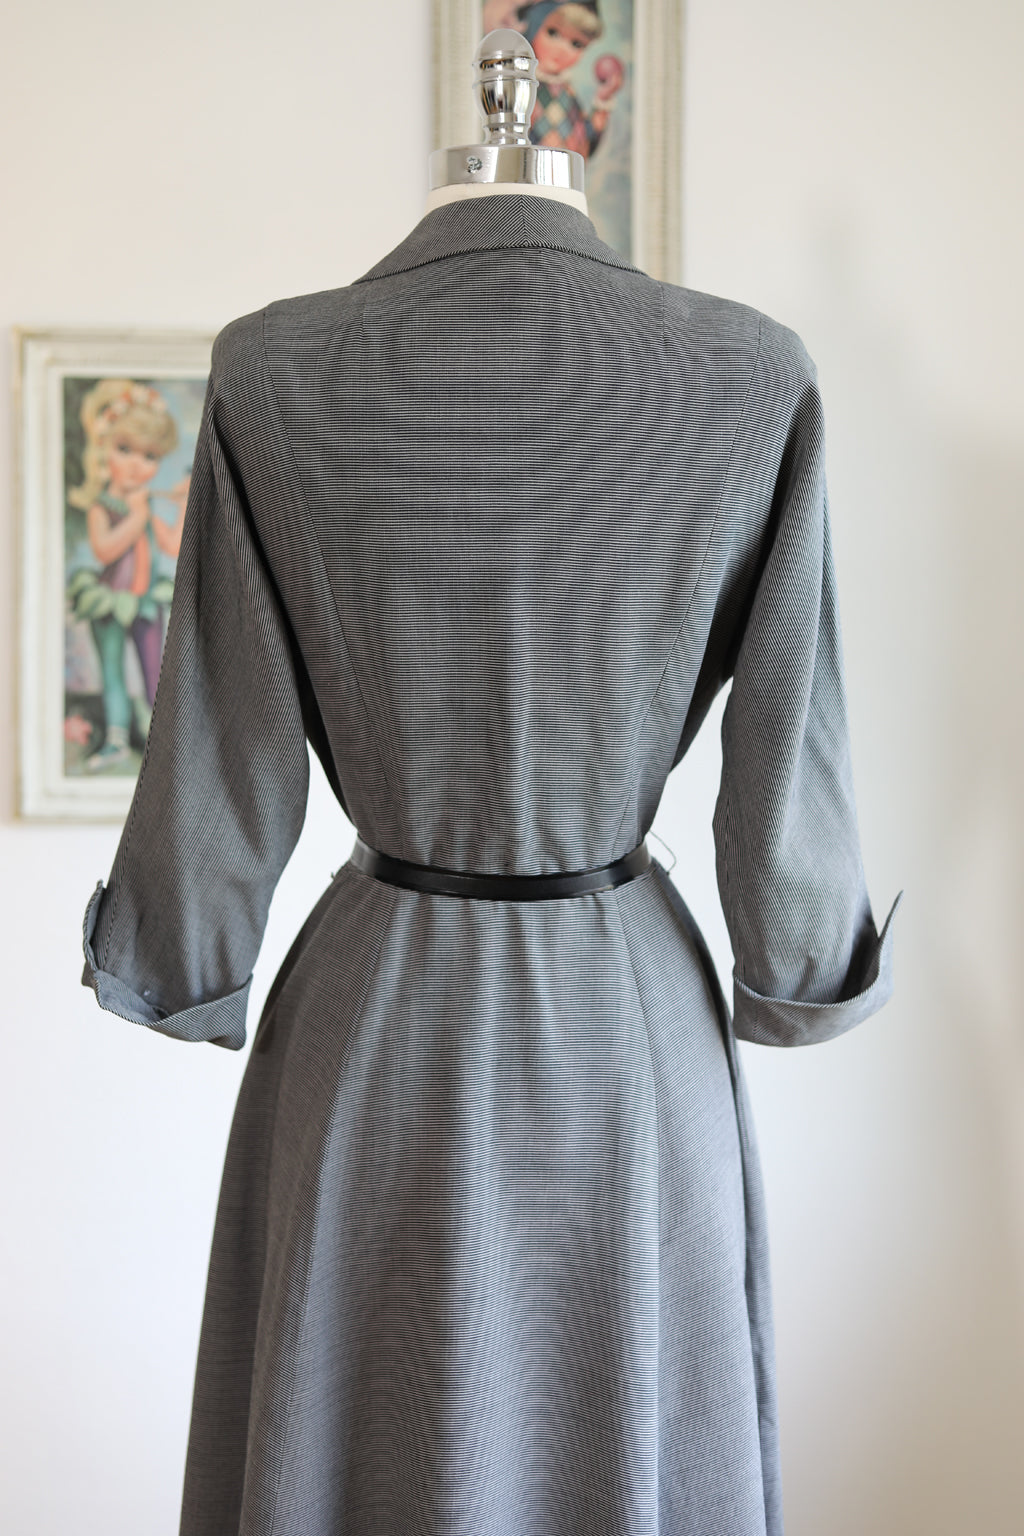 Vintage 1940s Dress - SHARP Black White Woven Stripe Princess Coat Dress w Bakelite Size M